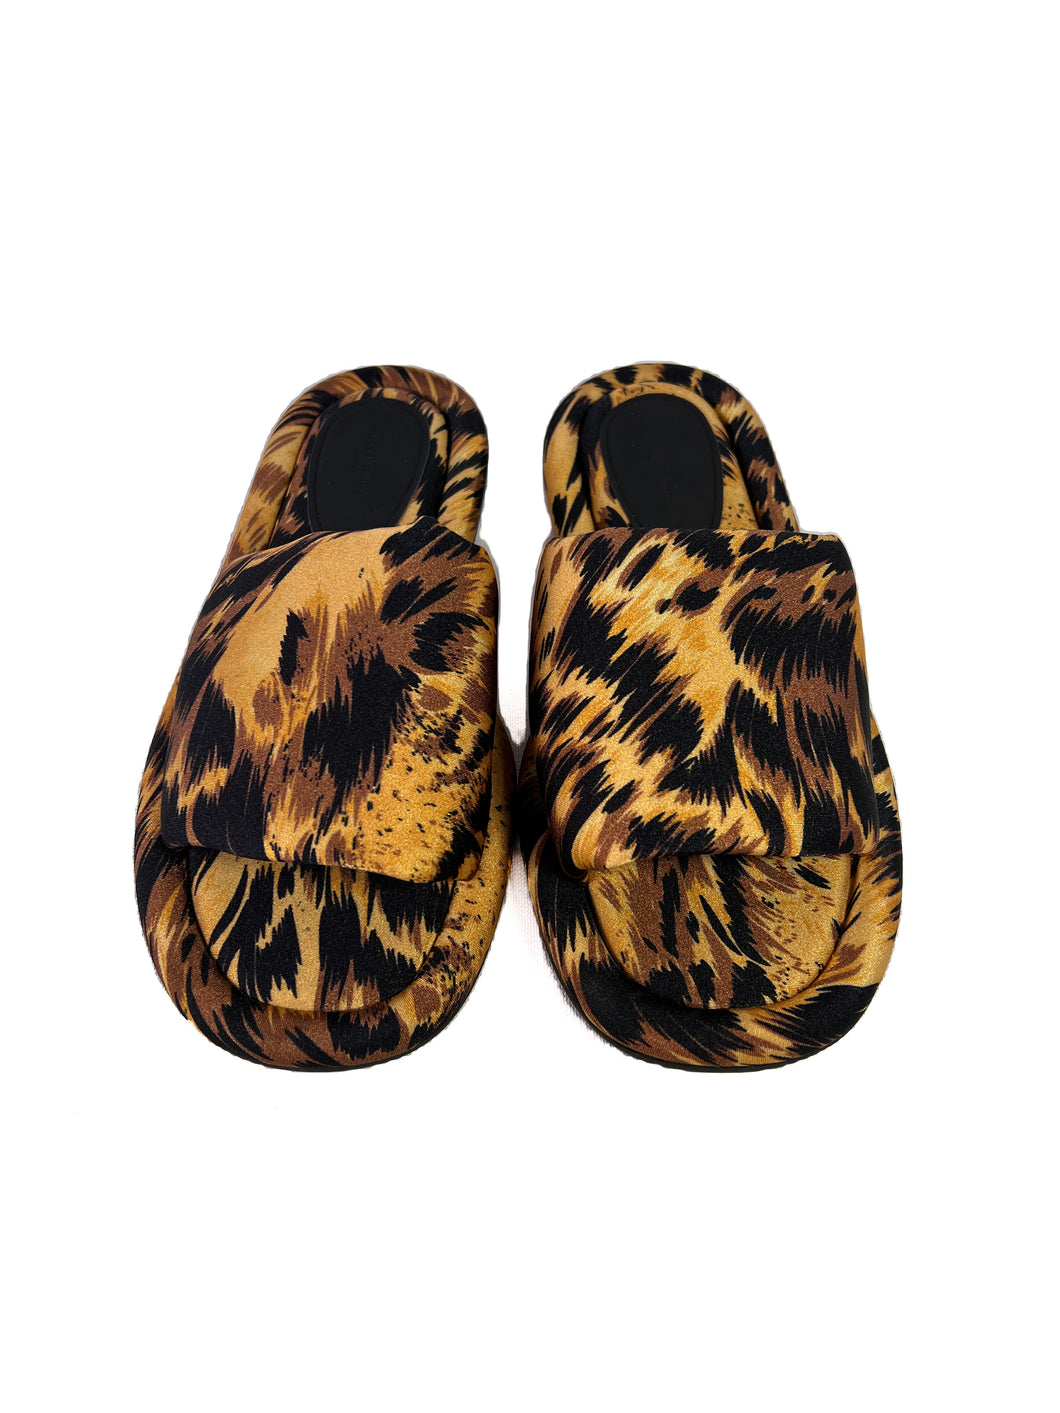 Balenciaga leopard print slides size 38